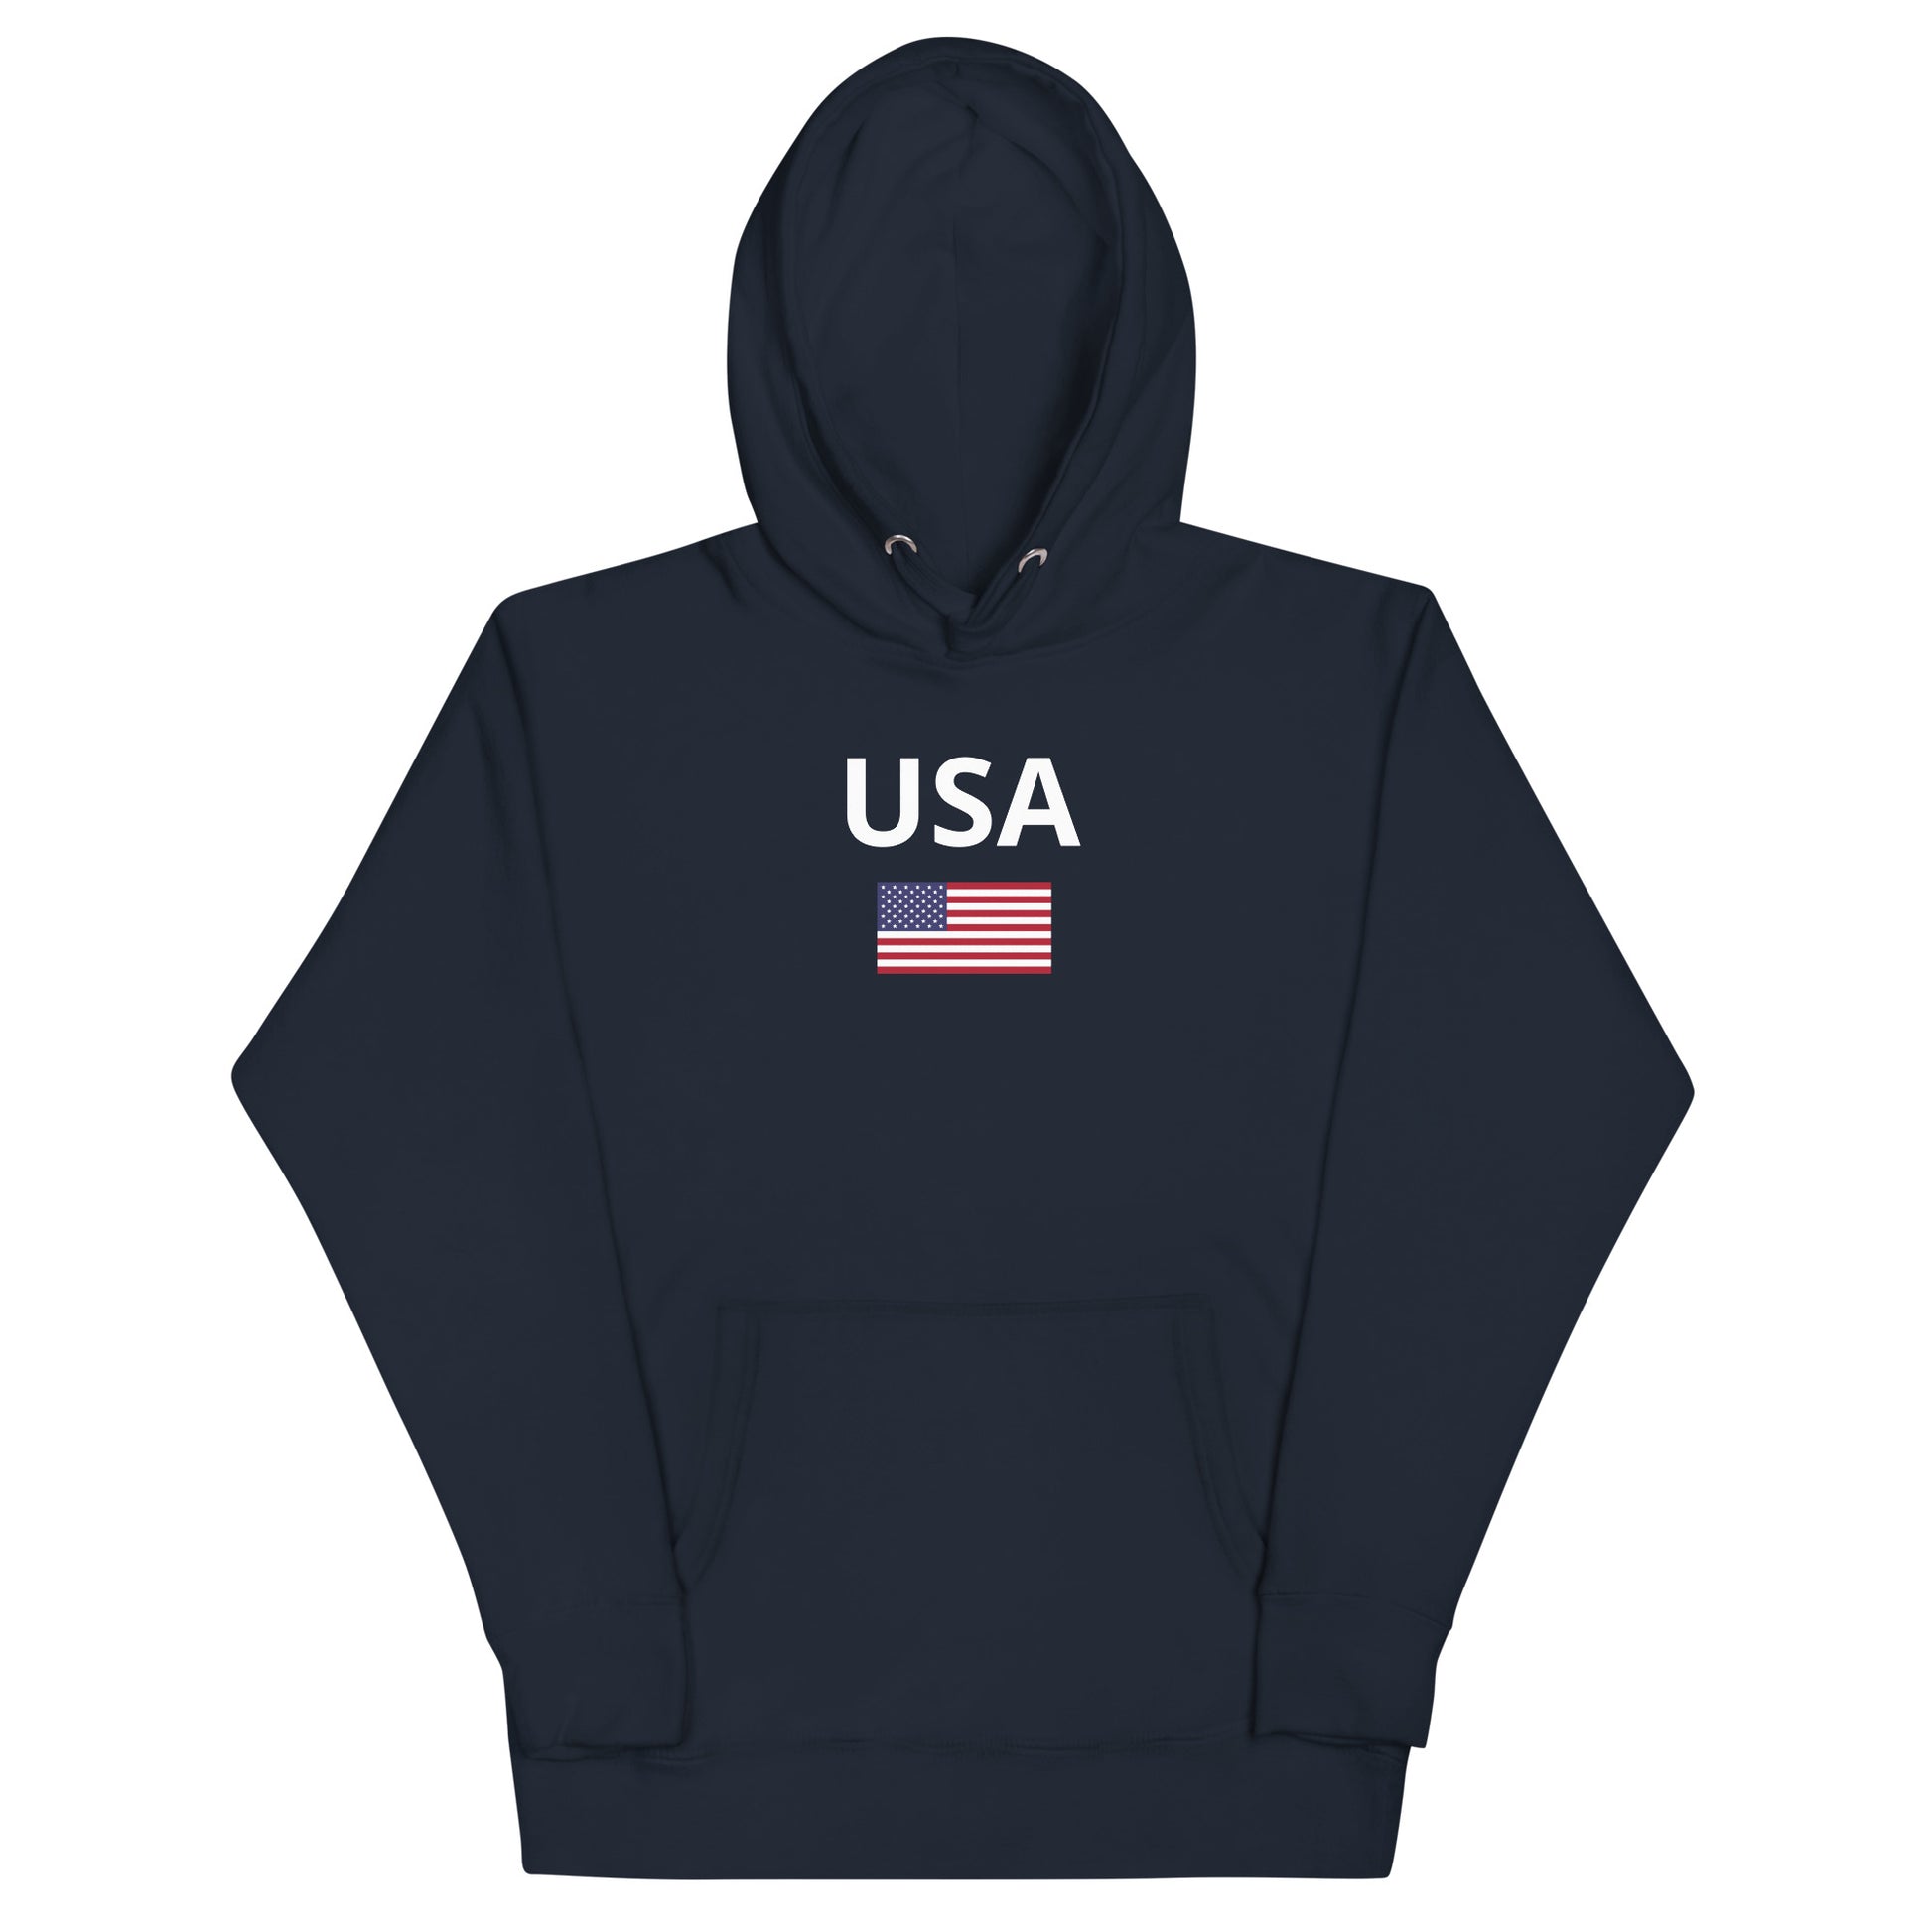 Navy blue unisex hoodie sweatshirt says 'USA' and has a US flag 